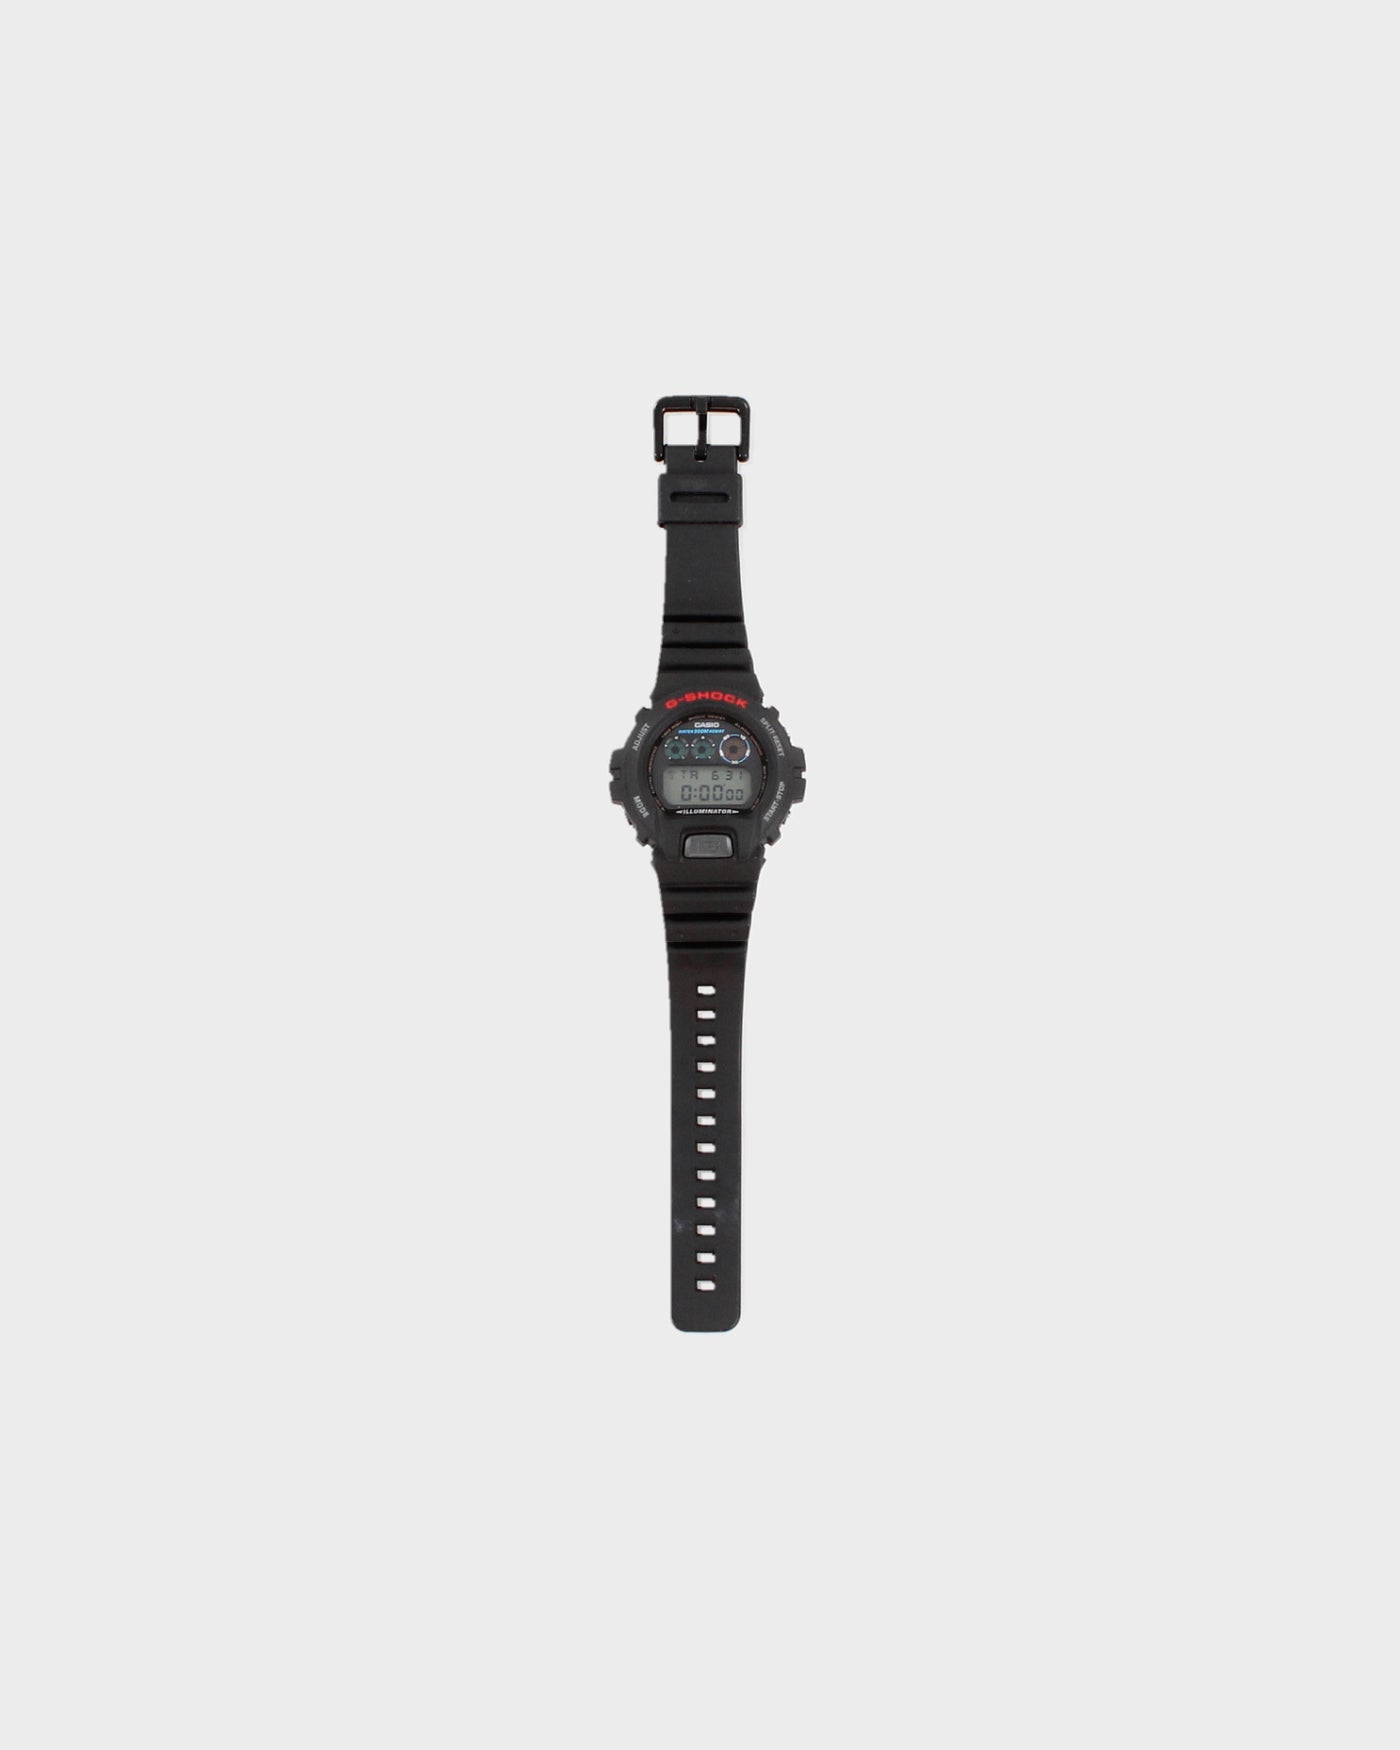 Casio G Shock 3230 Black Wrist Watch - O/S